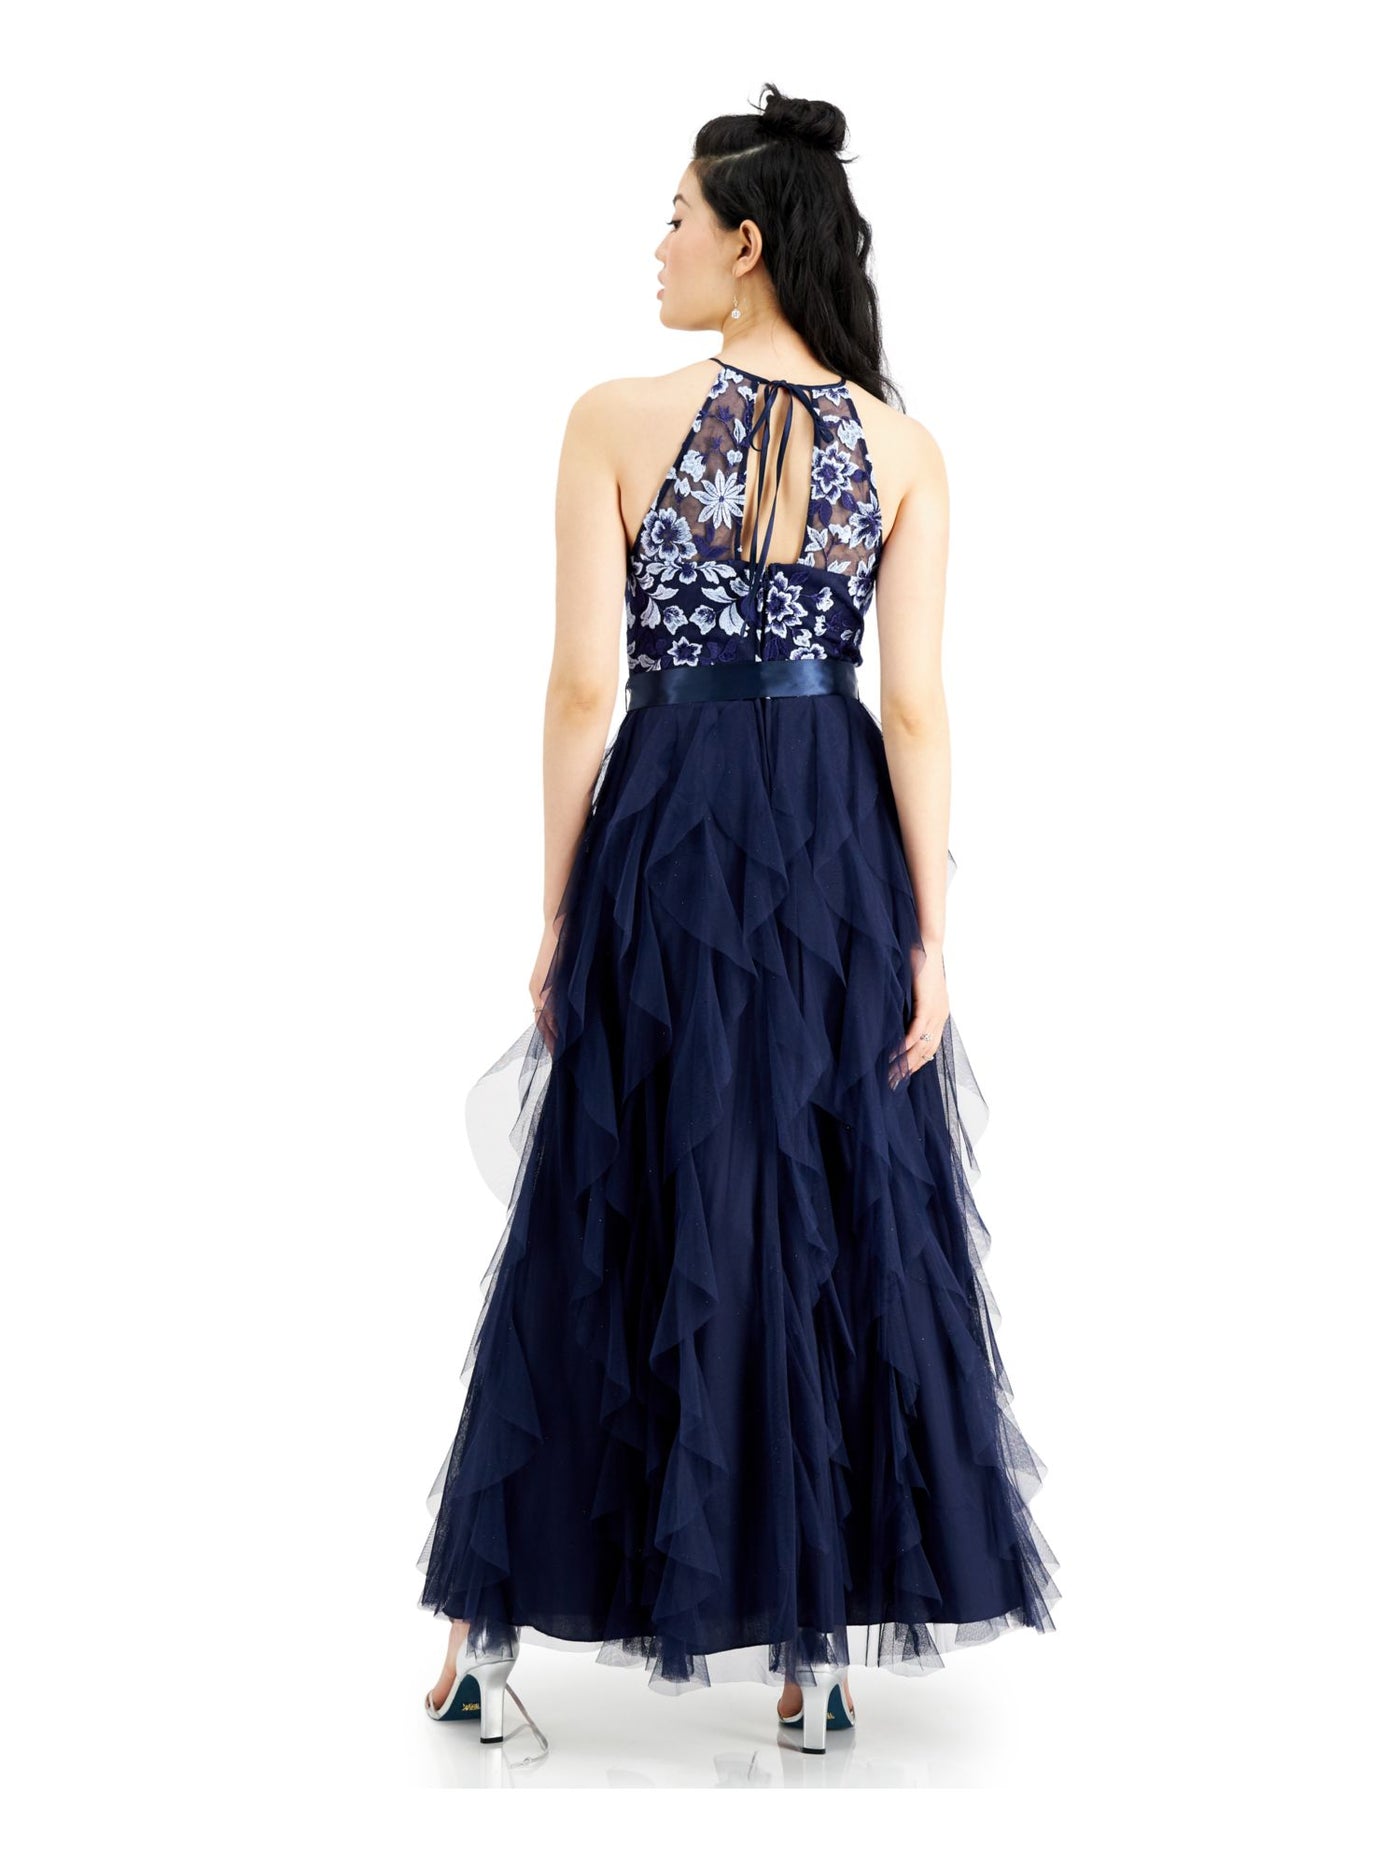 TEEZE ME Womens Navy Ruffled Textured Floral Sleeveless Halter Full-Length  Layered Prom Dress Juniors 5\6